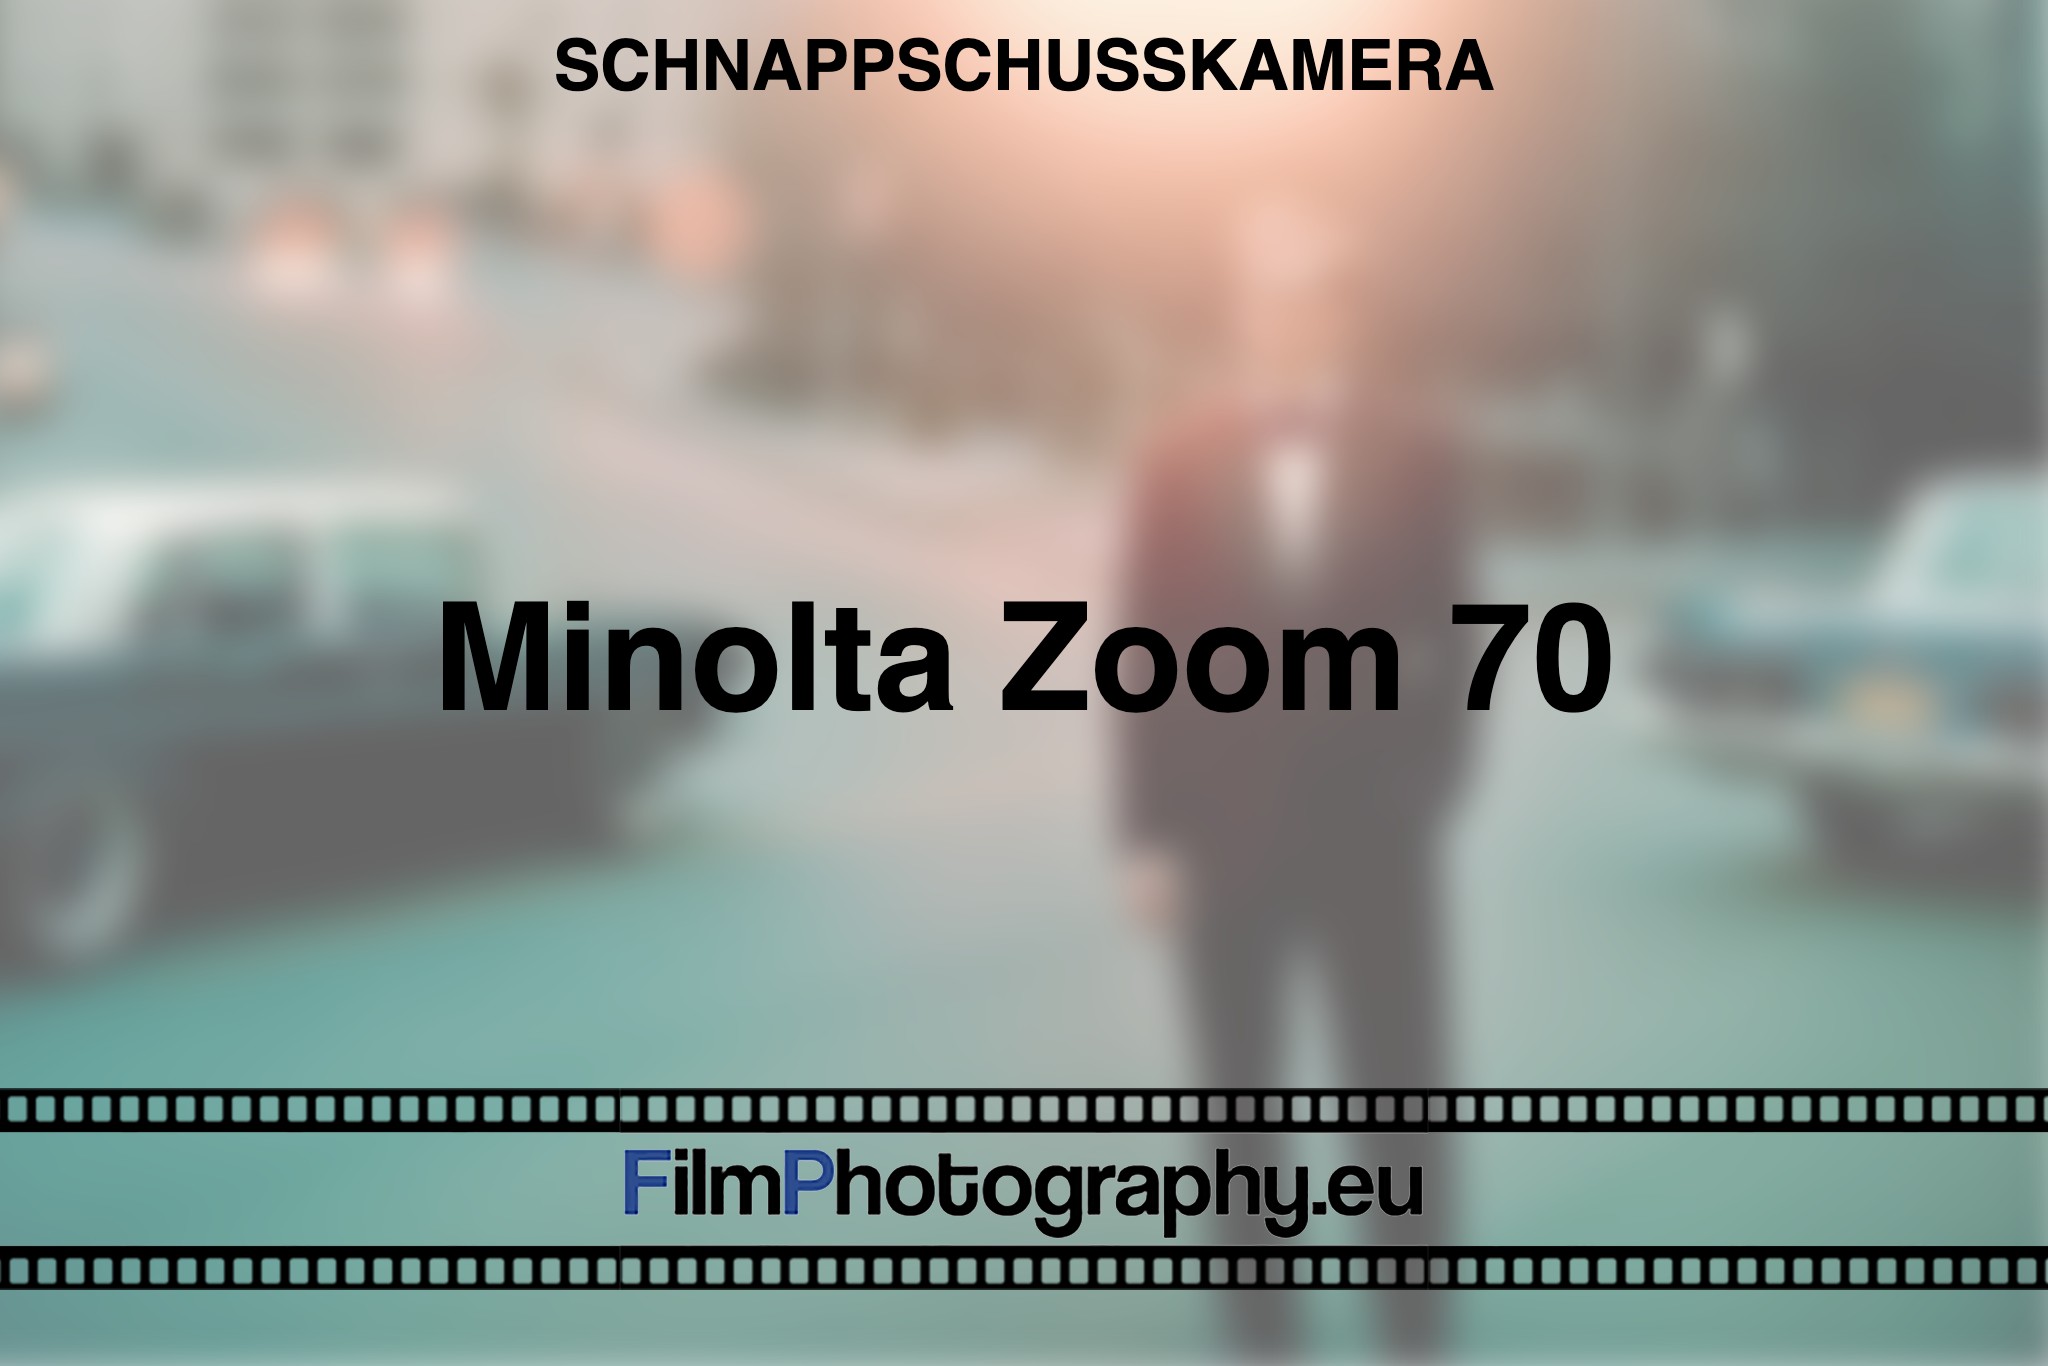 minolta-zoom-70-schnappschusskamera-bnv